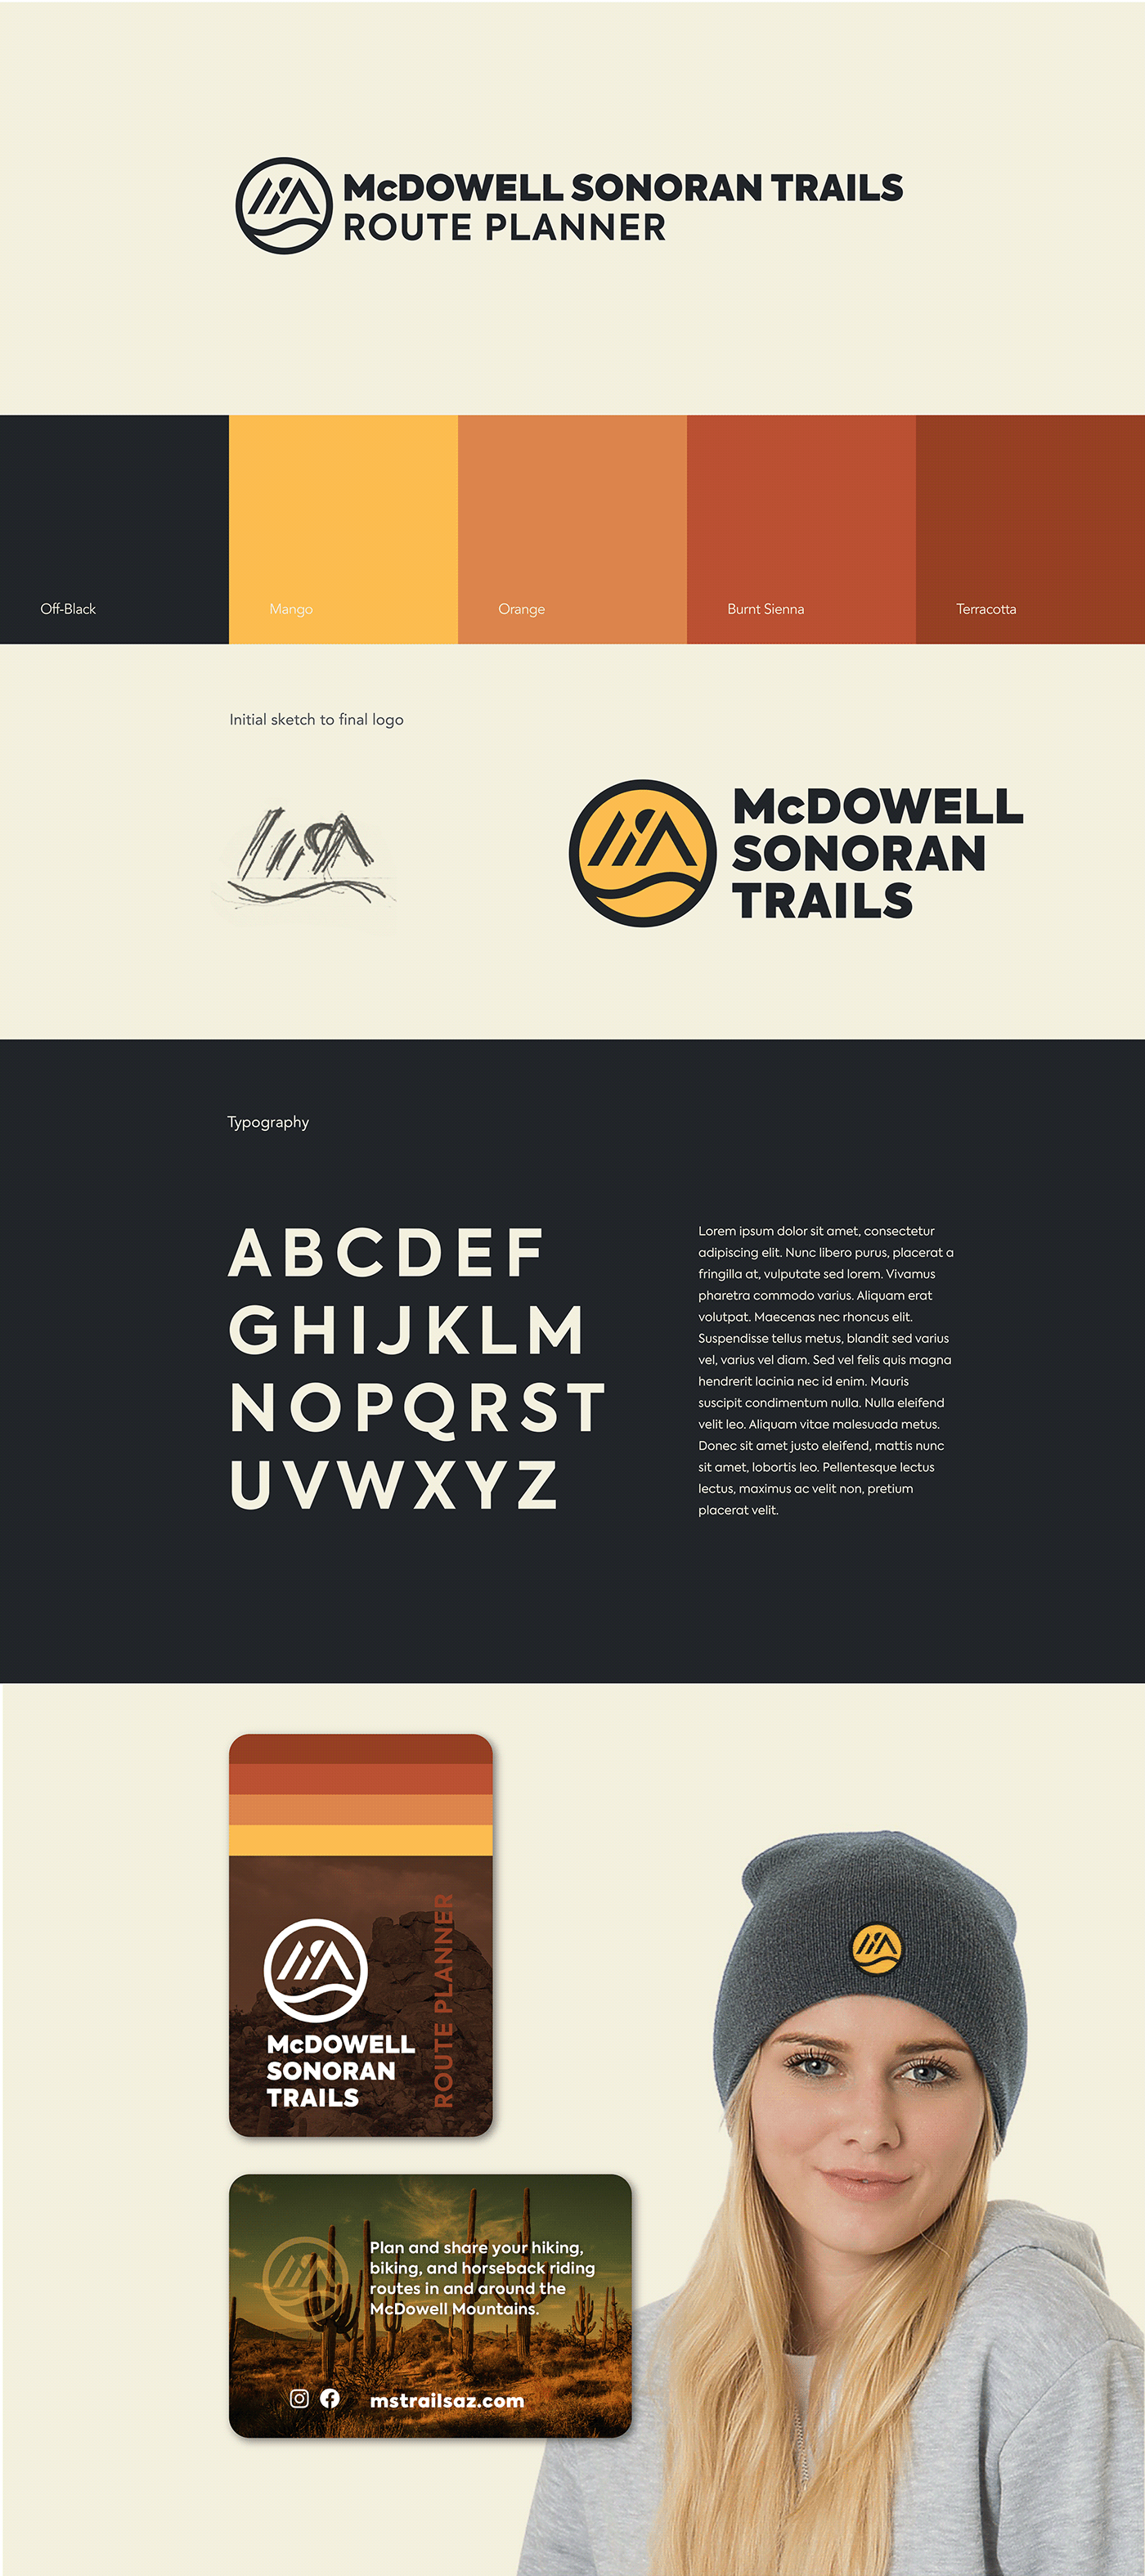 McDowell Sonoran Trails Brand 